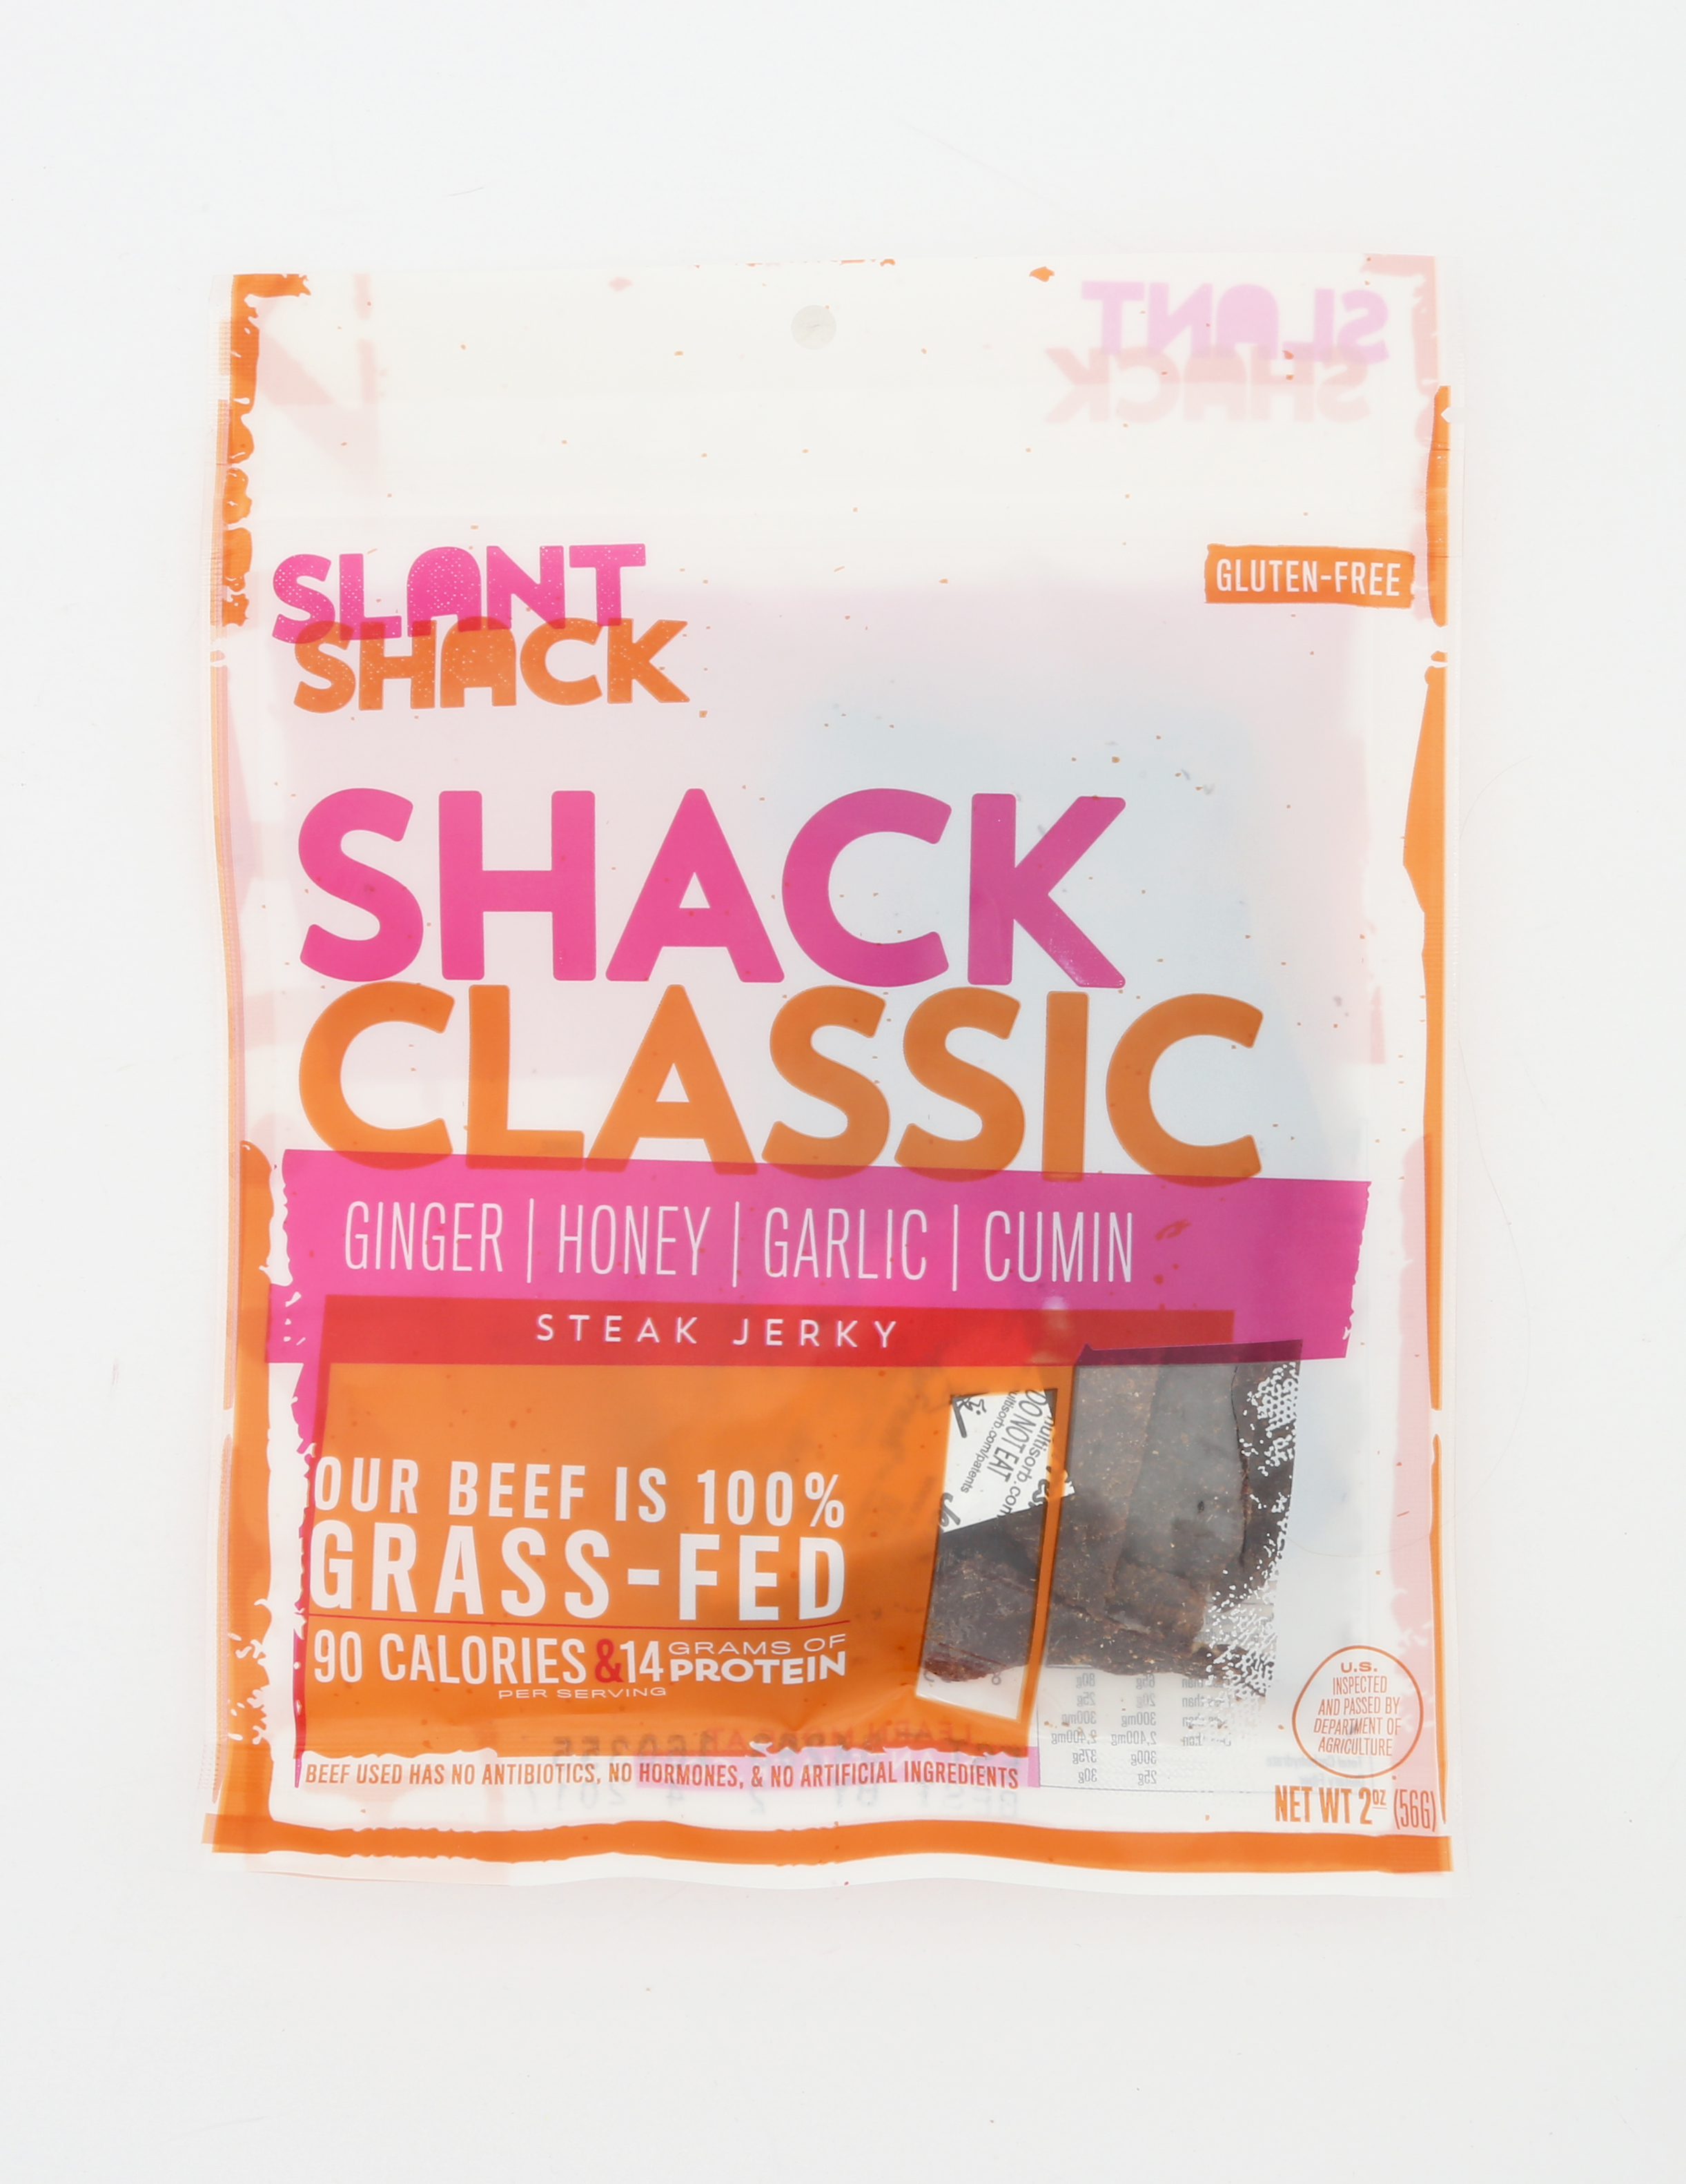 Shack Classic (2 oz)